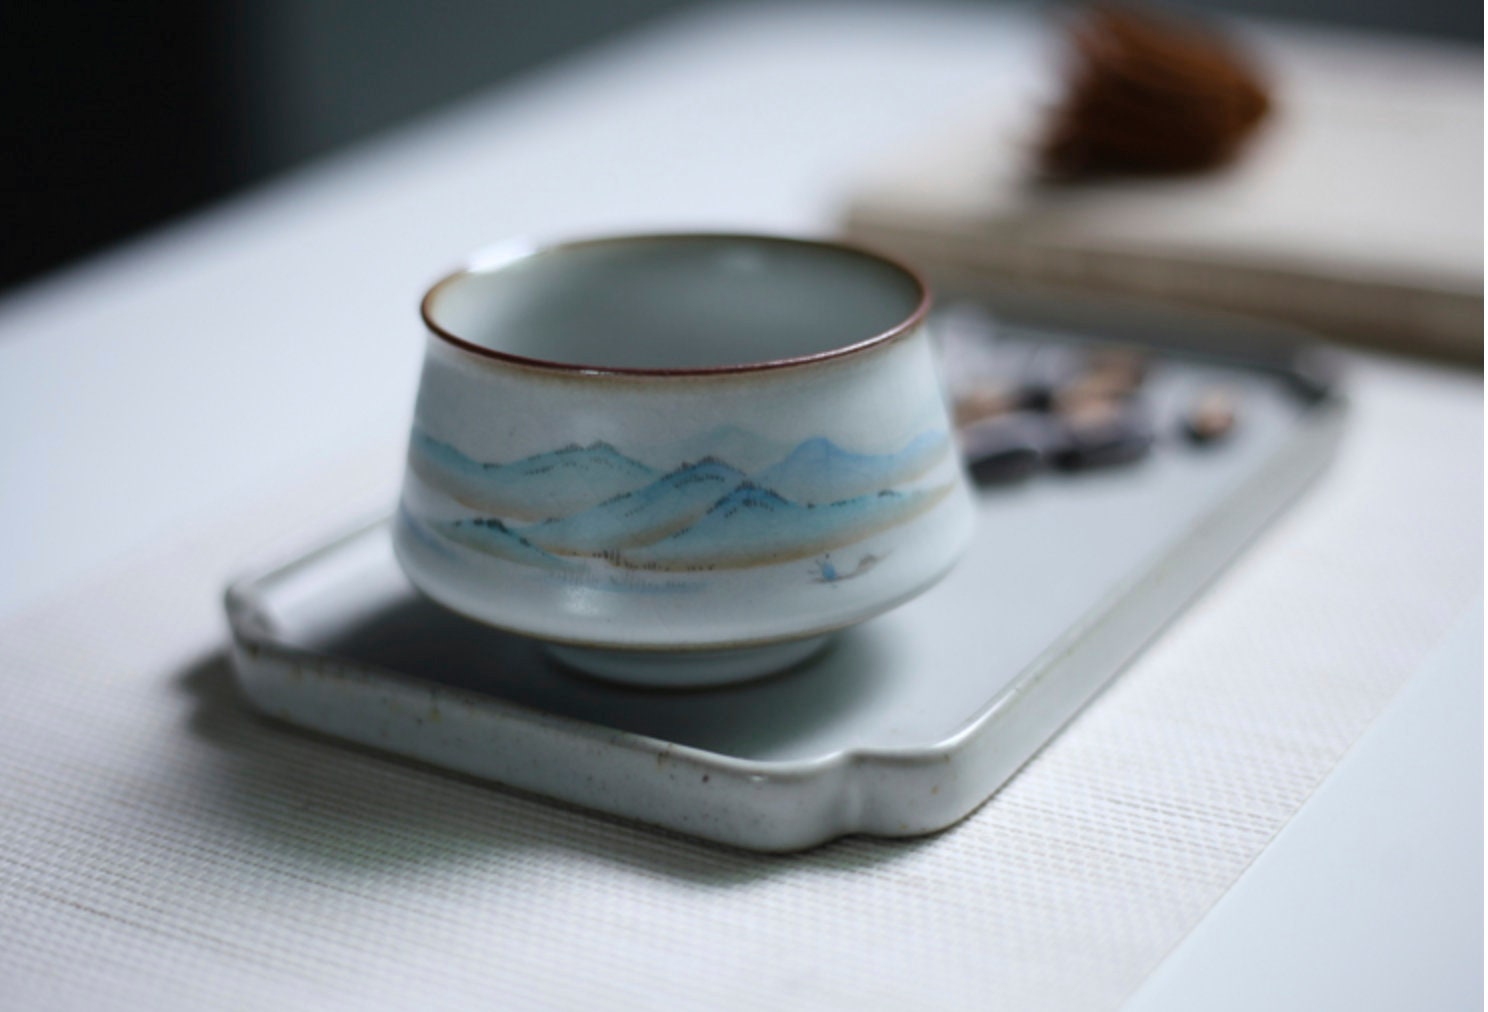 Gohobi Hand painted Mountain Tea Cup Ceramic Chinese Gongfu tea Kung fu tea Japanese Chado